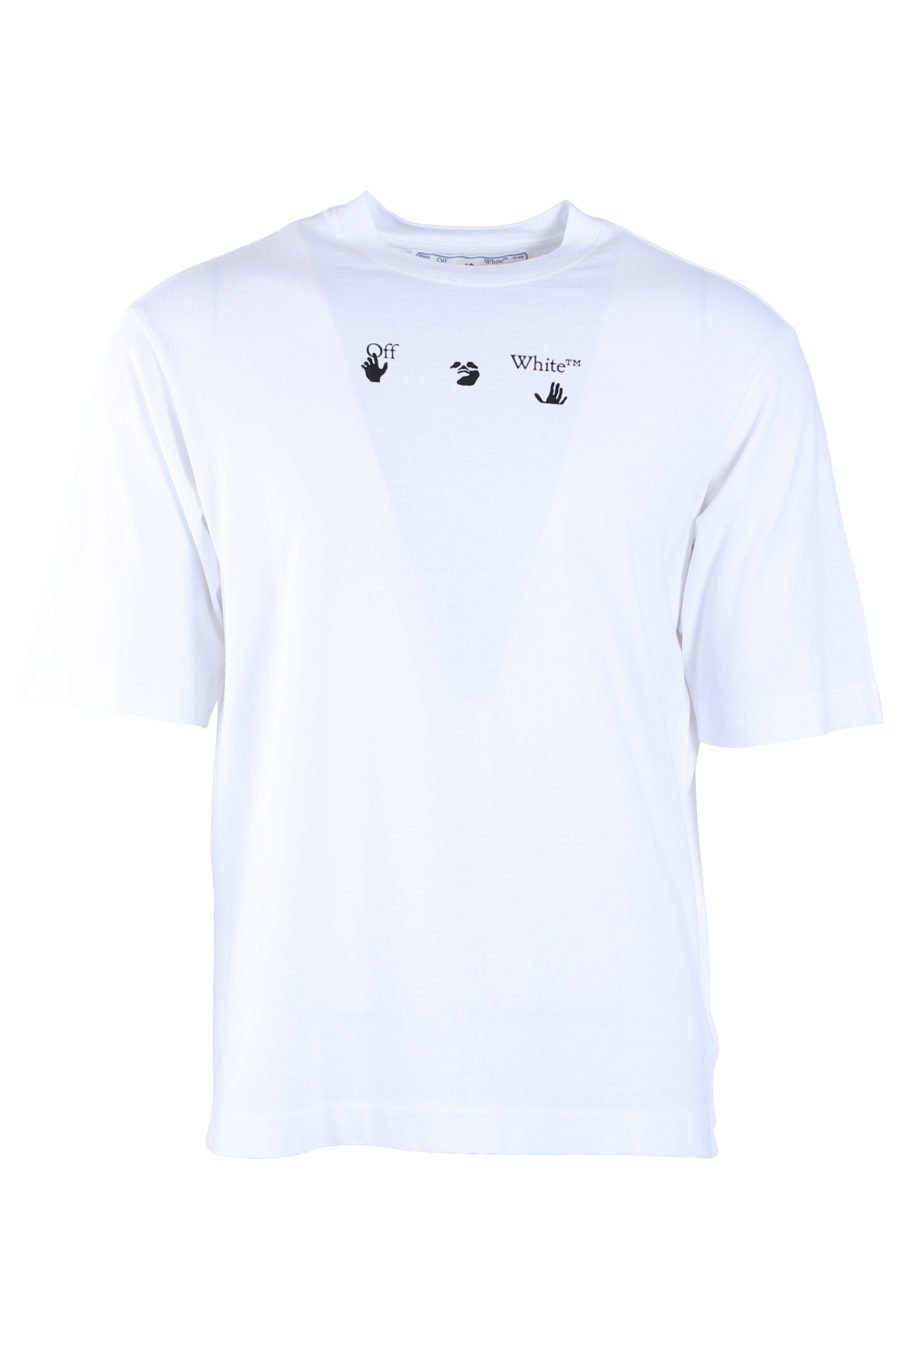 T-shirt branca com motivo "Arrows" - IMG 9117